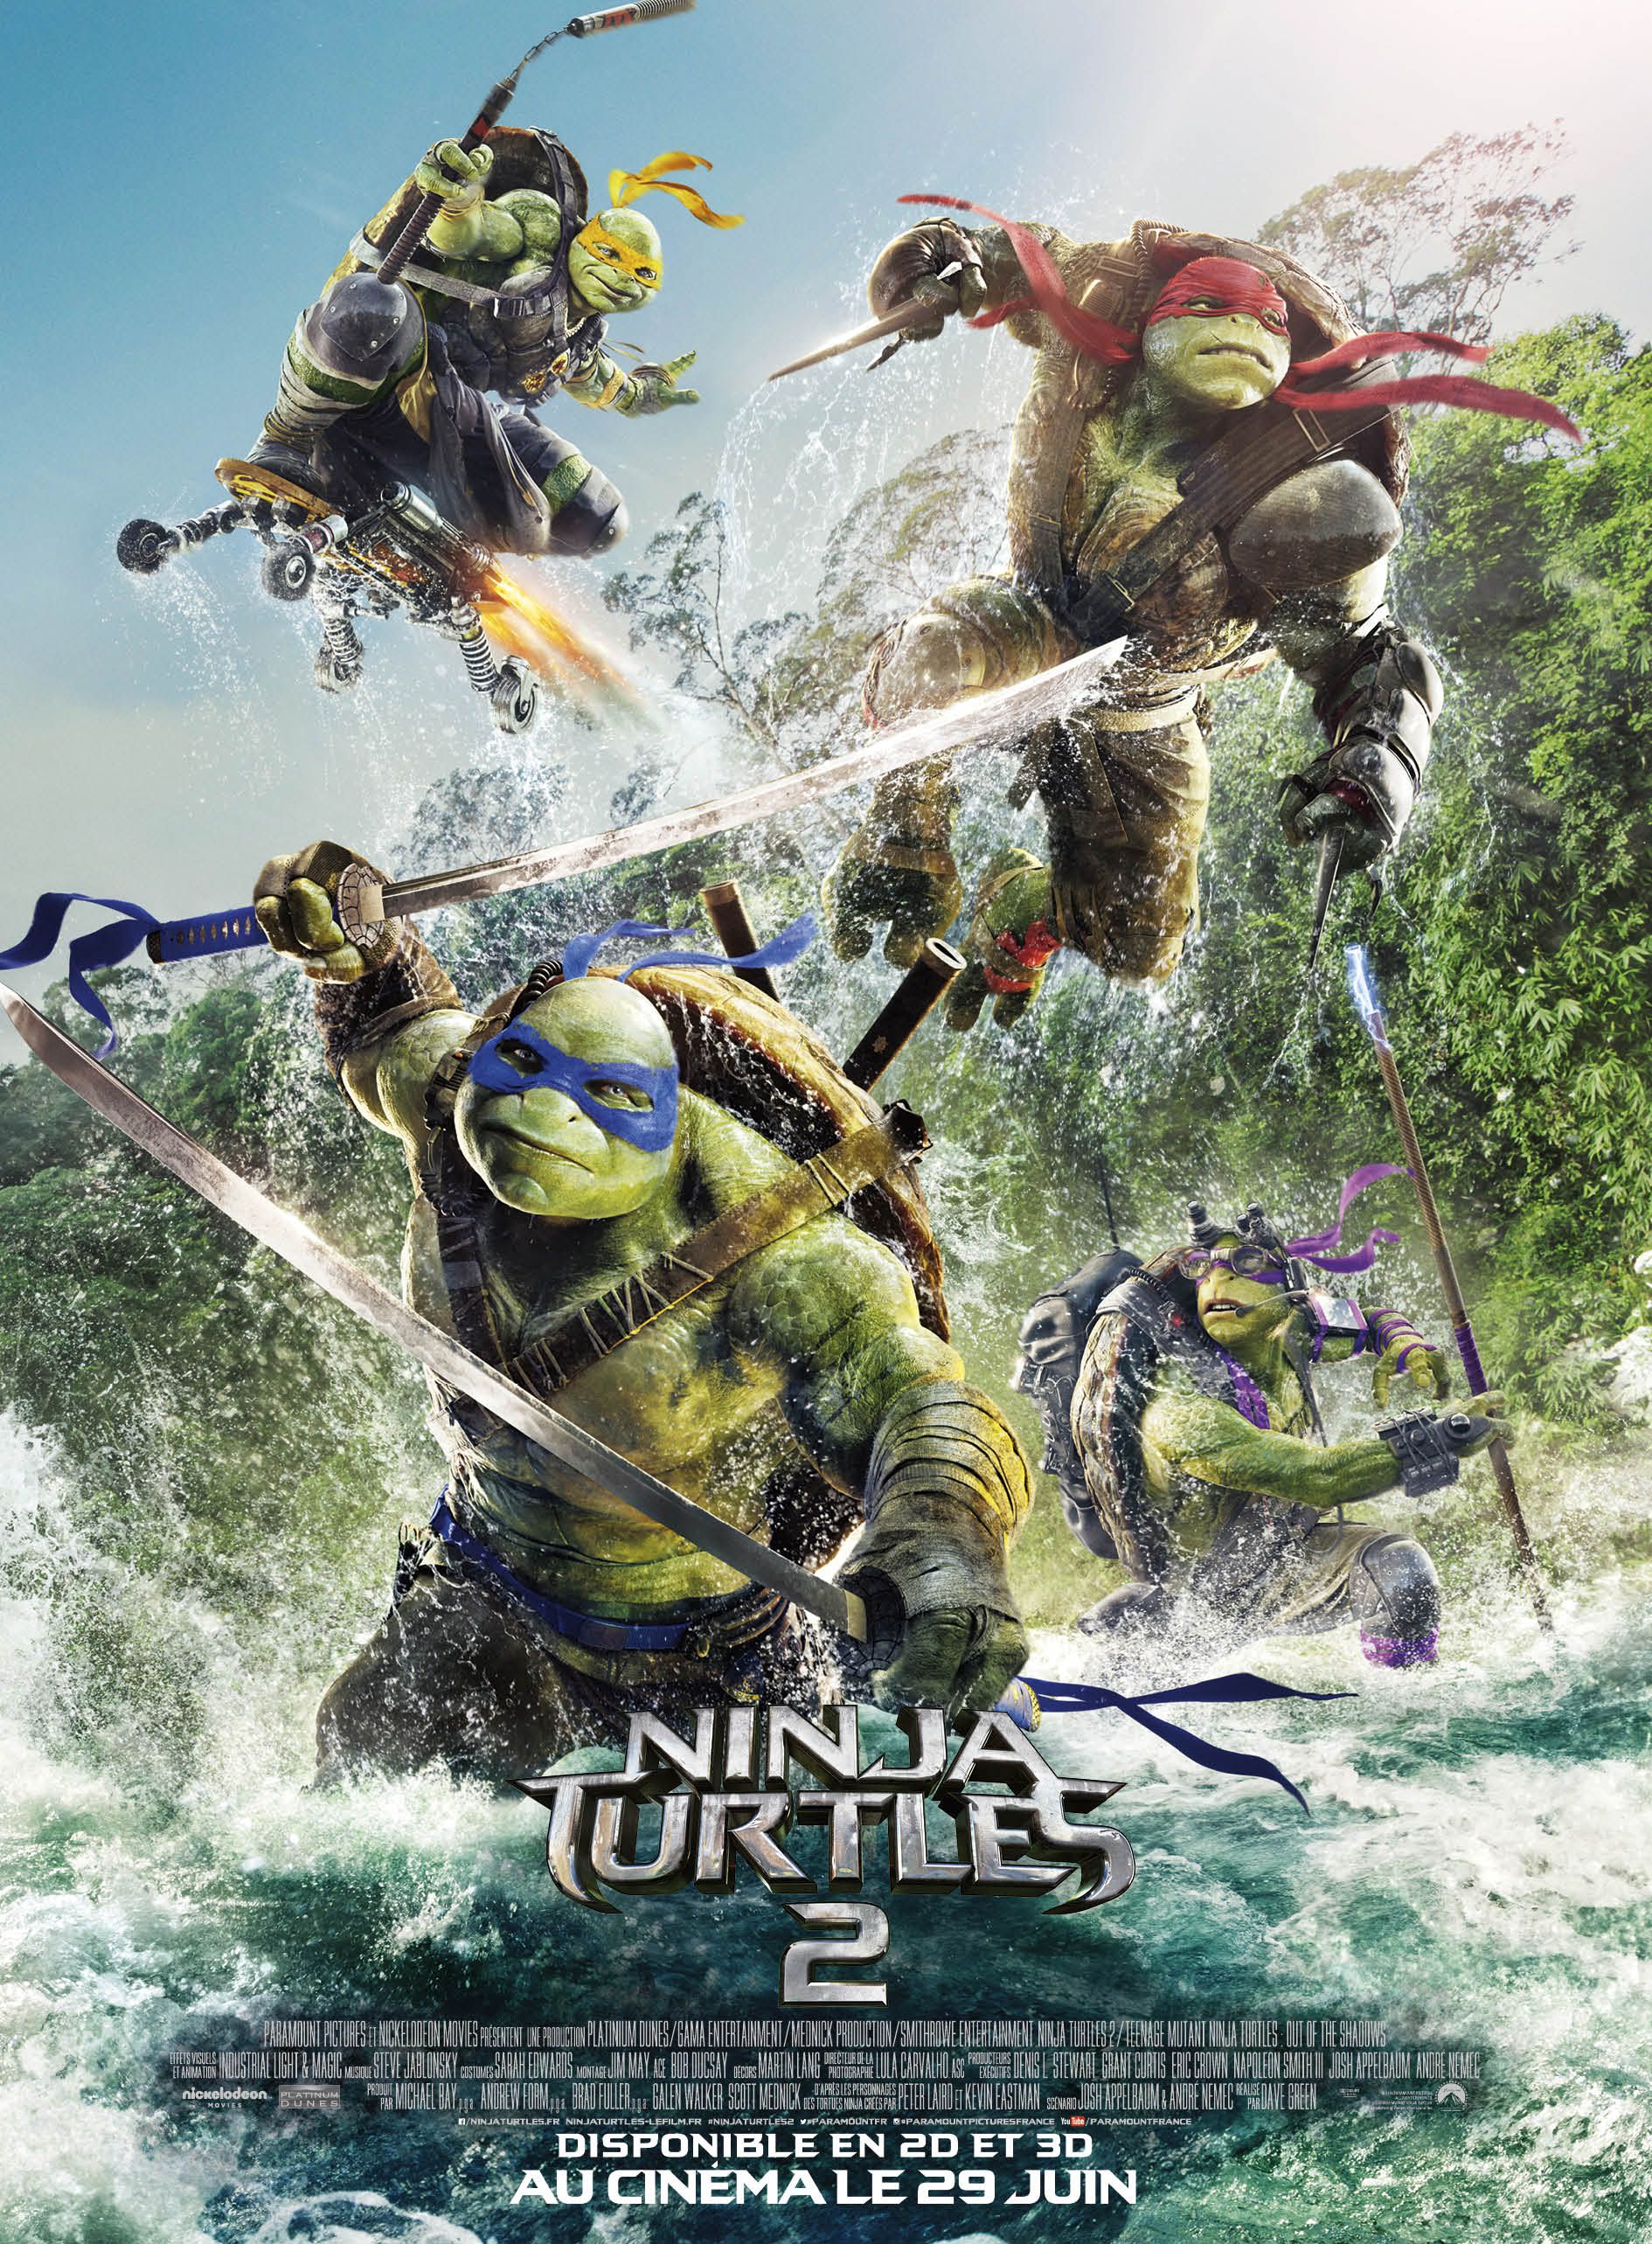 Ninja Turtles 2 - Film (2016) streaming VF gratuit complet